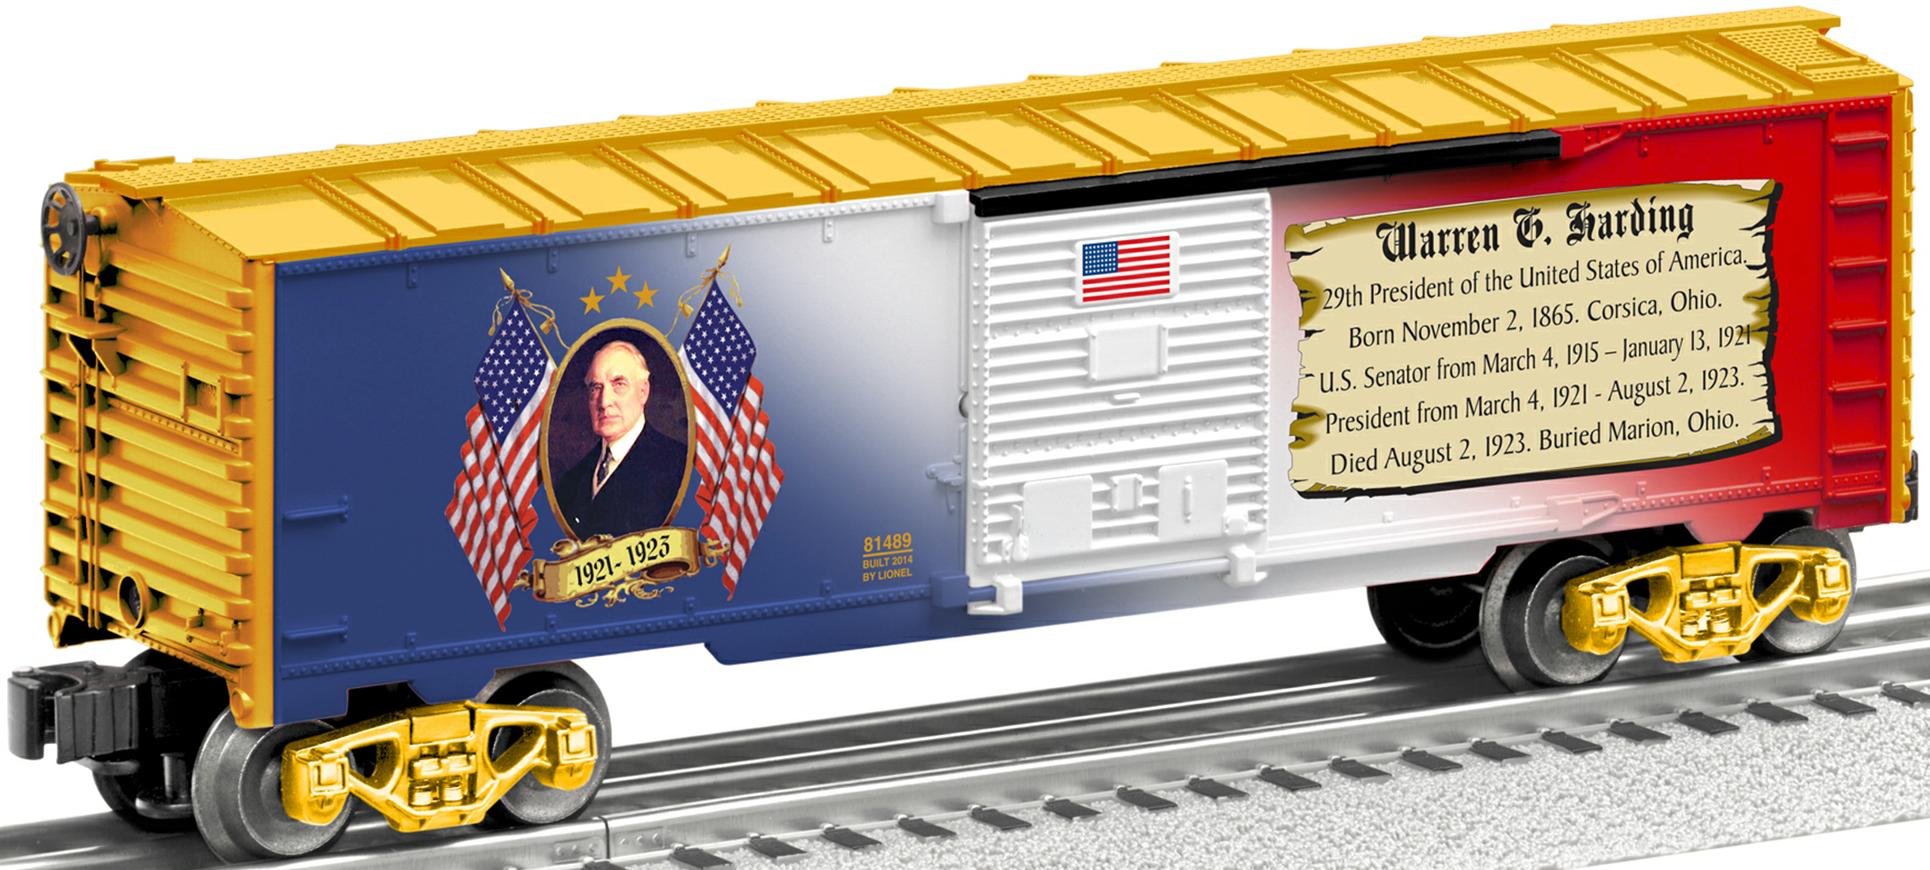 Warren G. Harding boxcar image